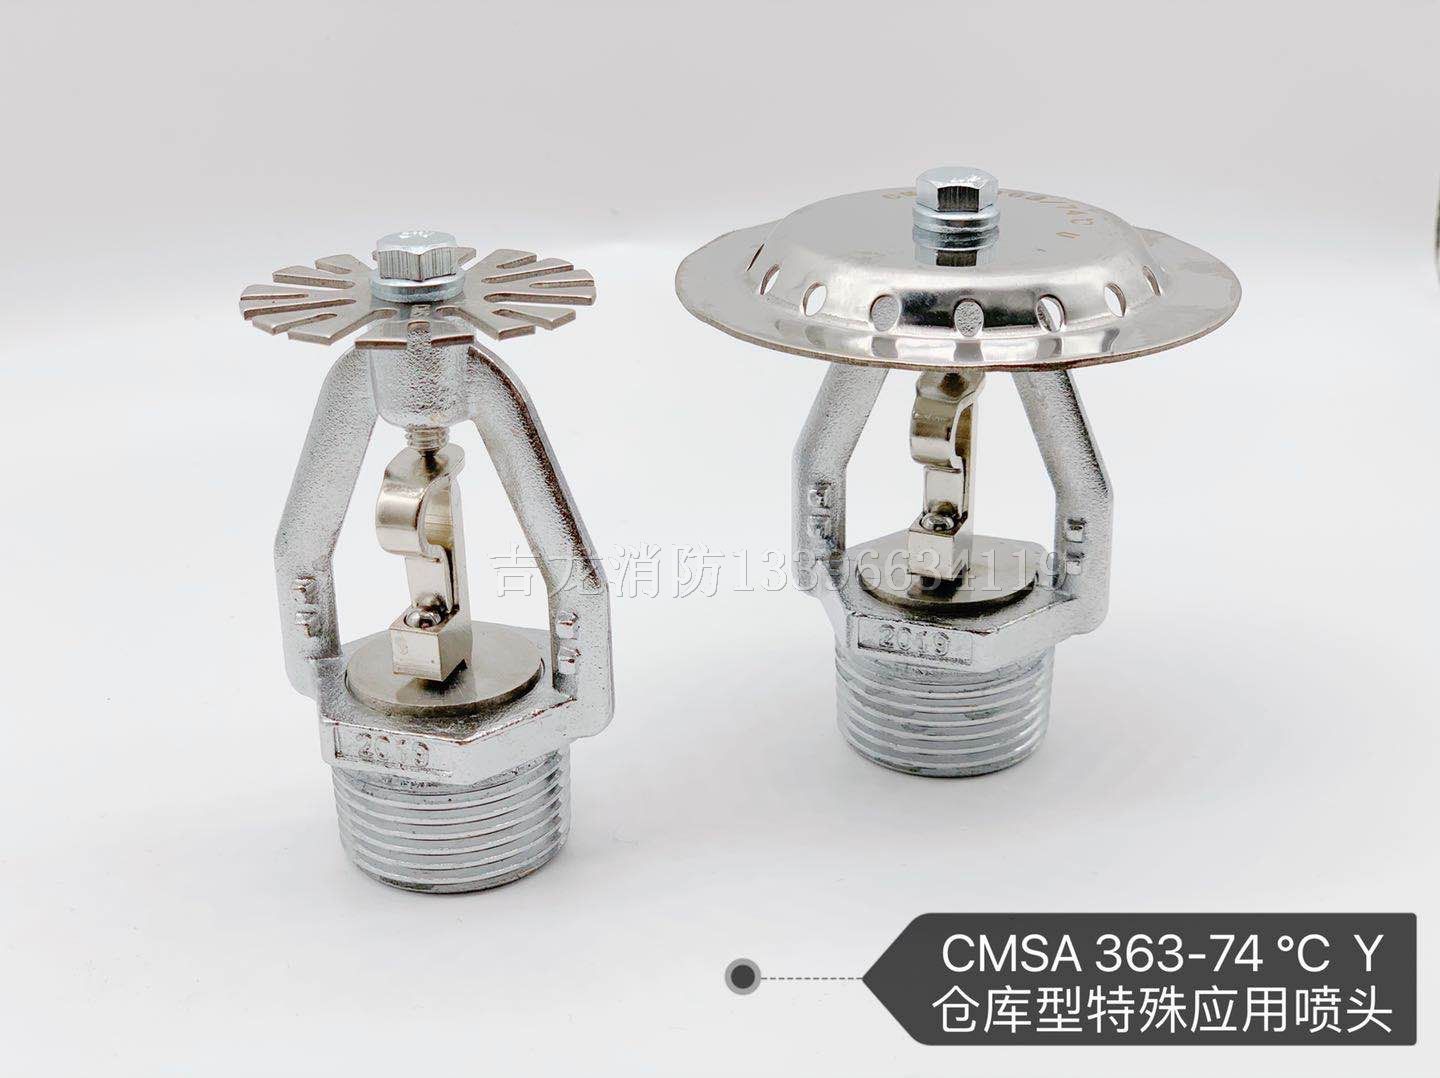 CMSA 363-74°C Y仓库型特殊应用喷头